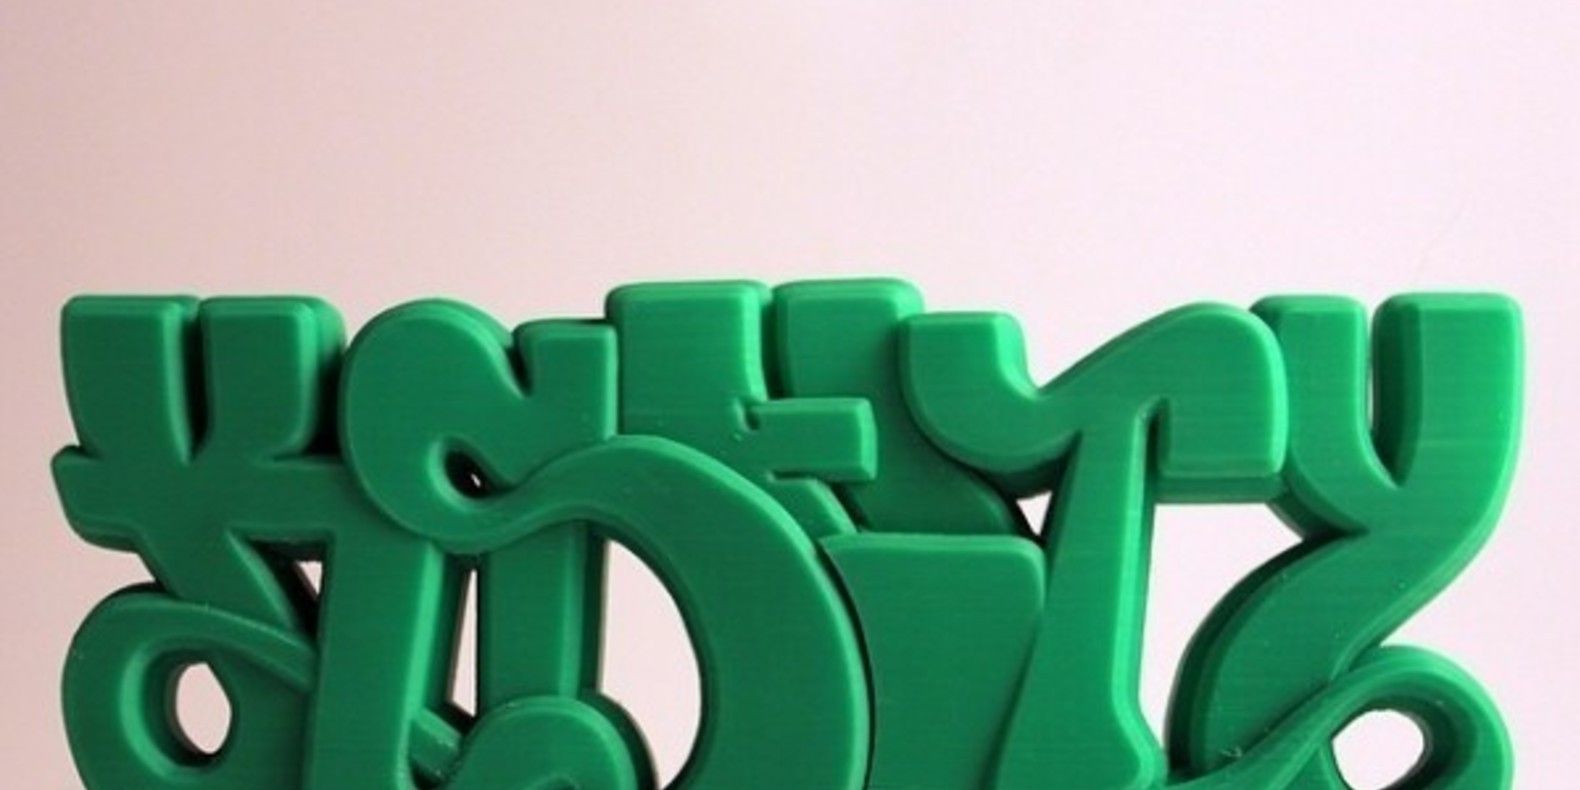 11-KUSHTY-3DPrint graffitis imprimés en 3D Noramlly Ben